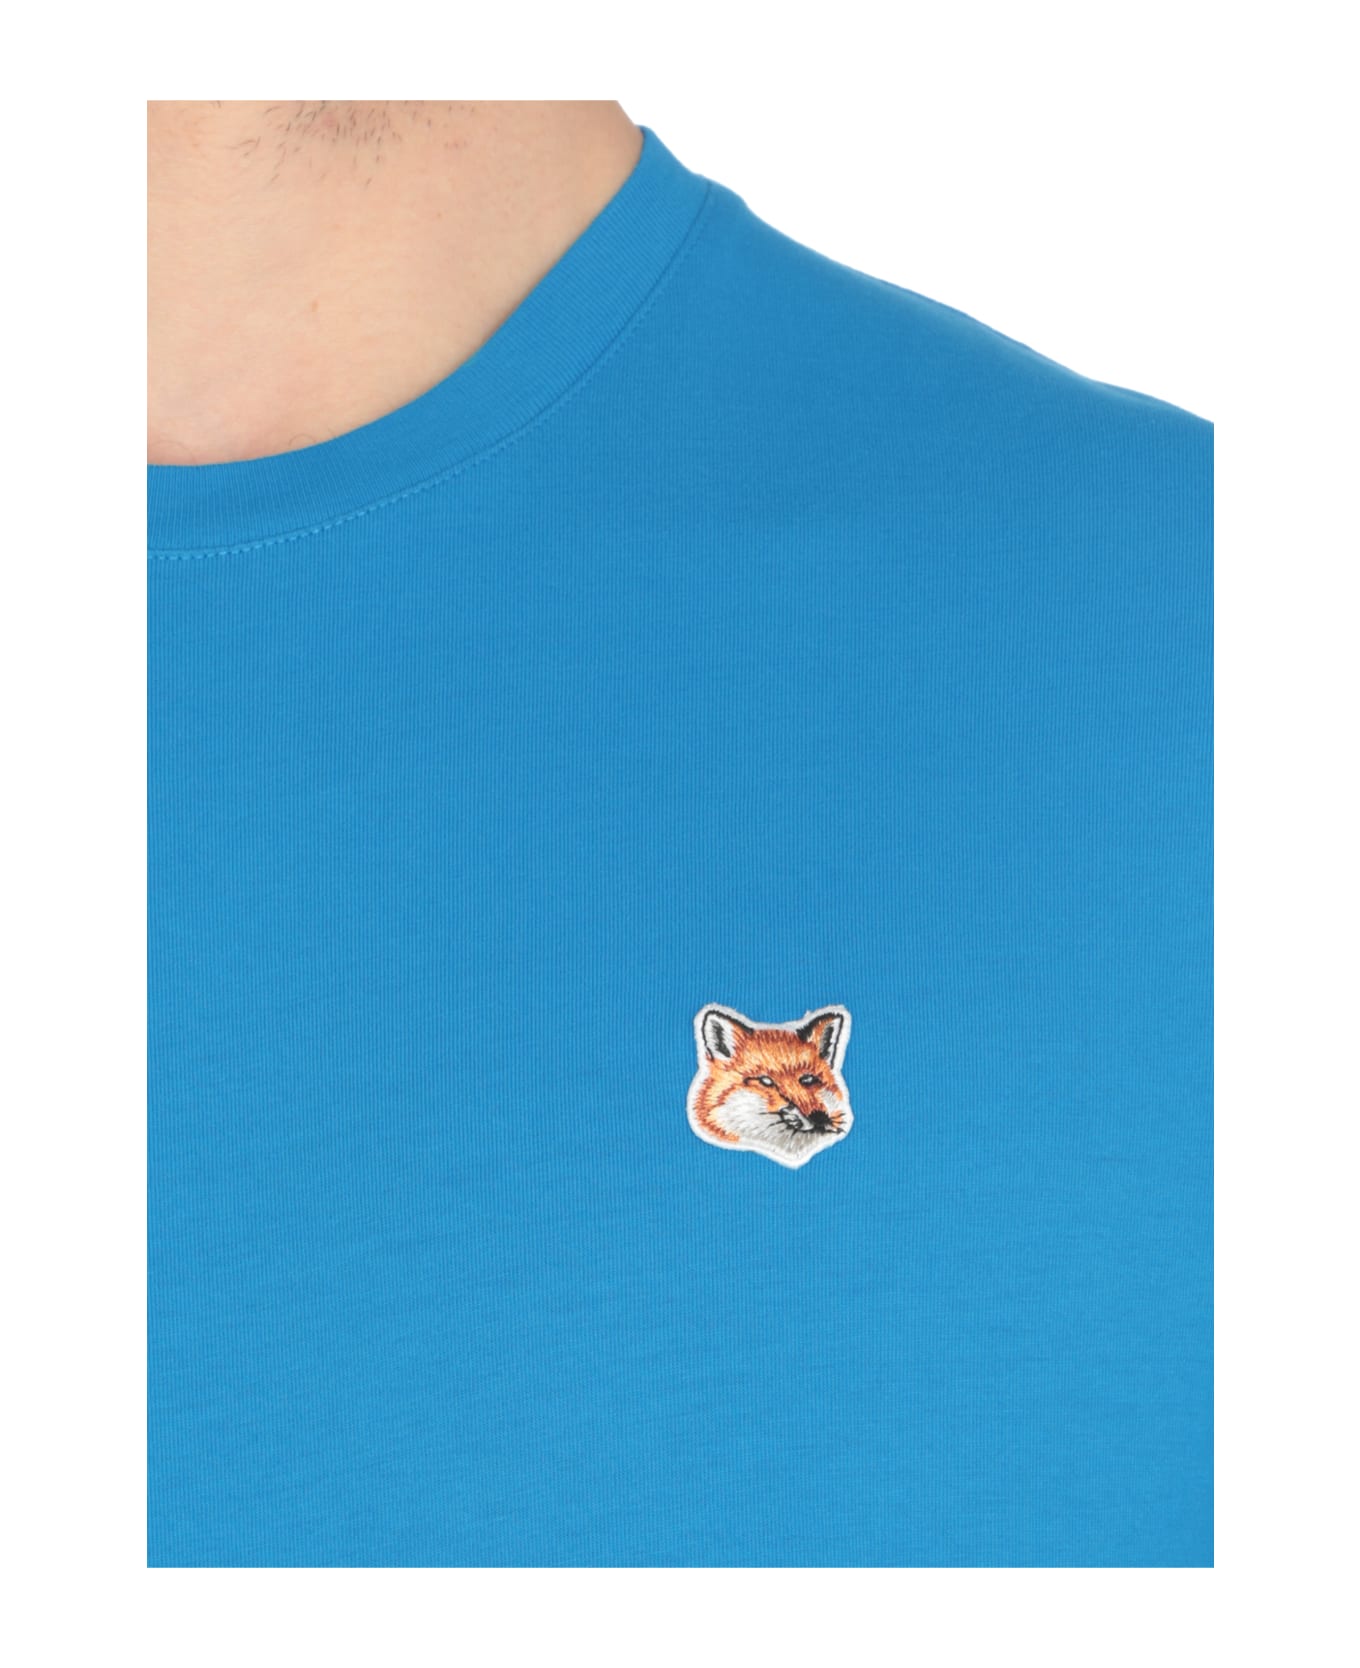 Maison Kitsuné Fox Head T-shirt - Blue